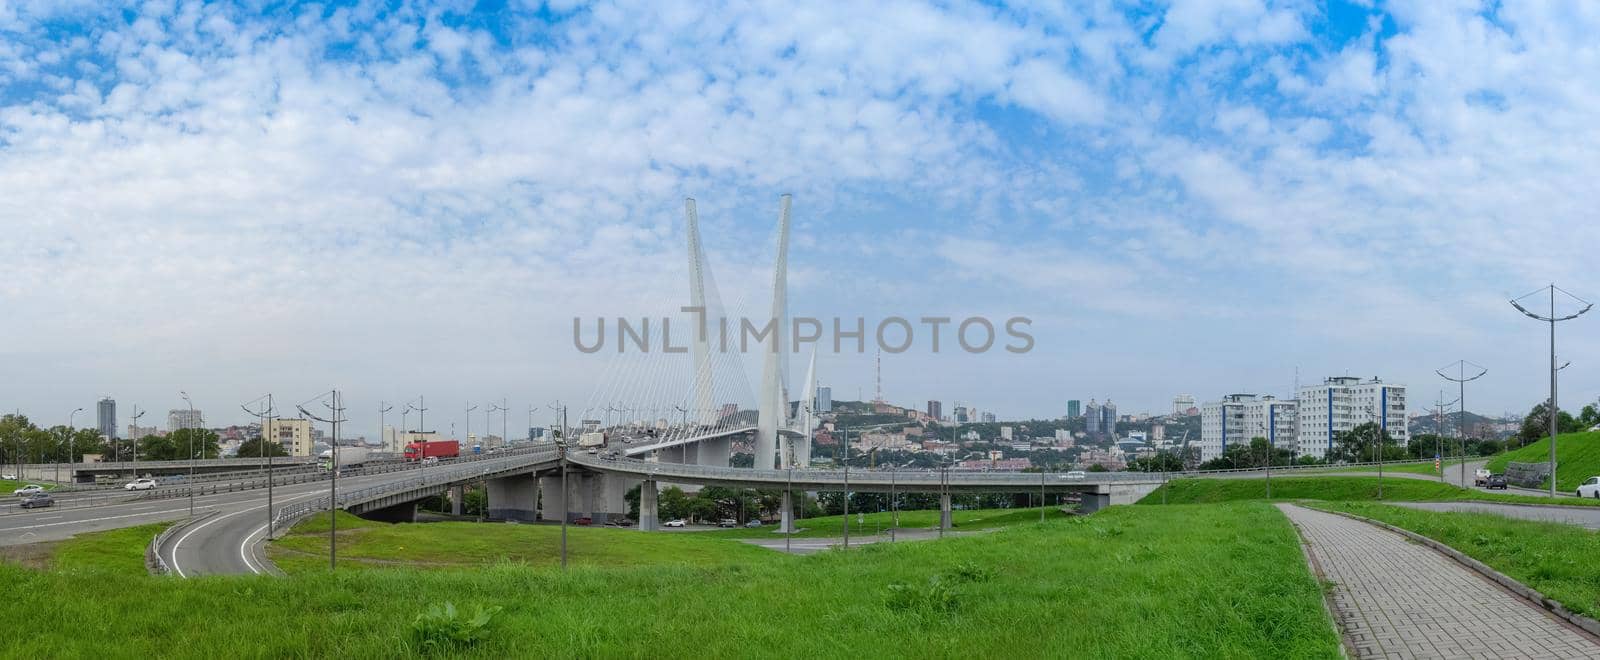 Vladivostok, Primorsky Krai-September 3, 2019: Panorama of the urban landscape overlooking the Golden bridge and highway.